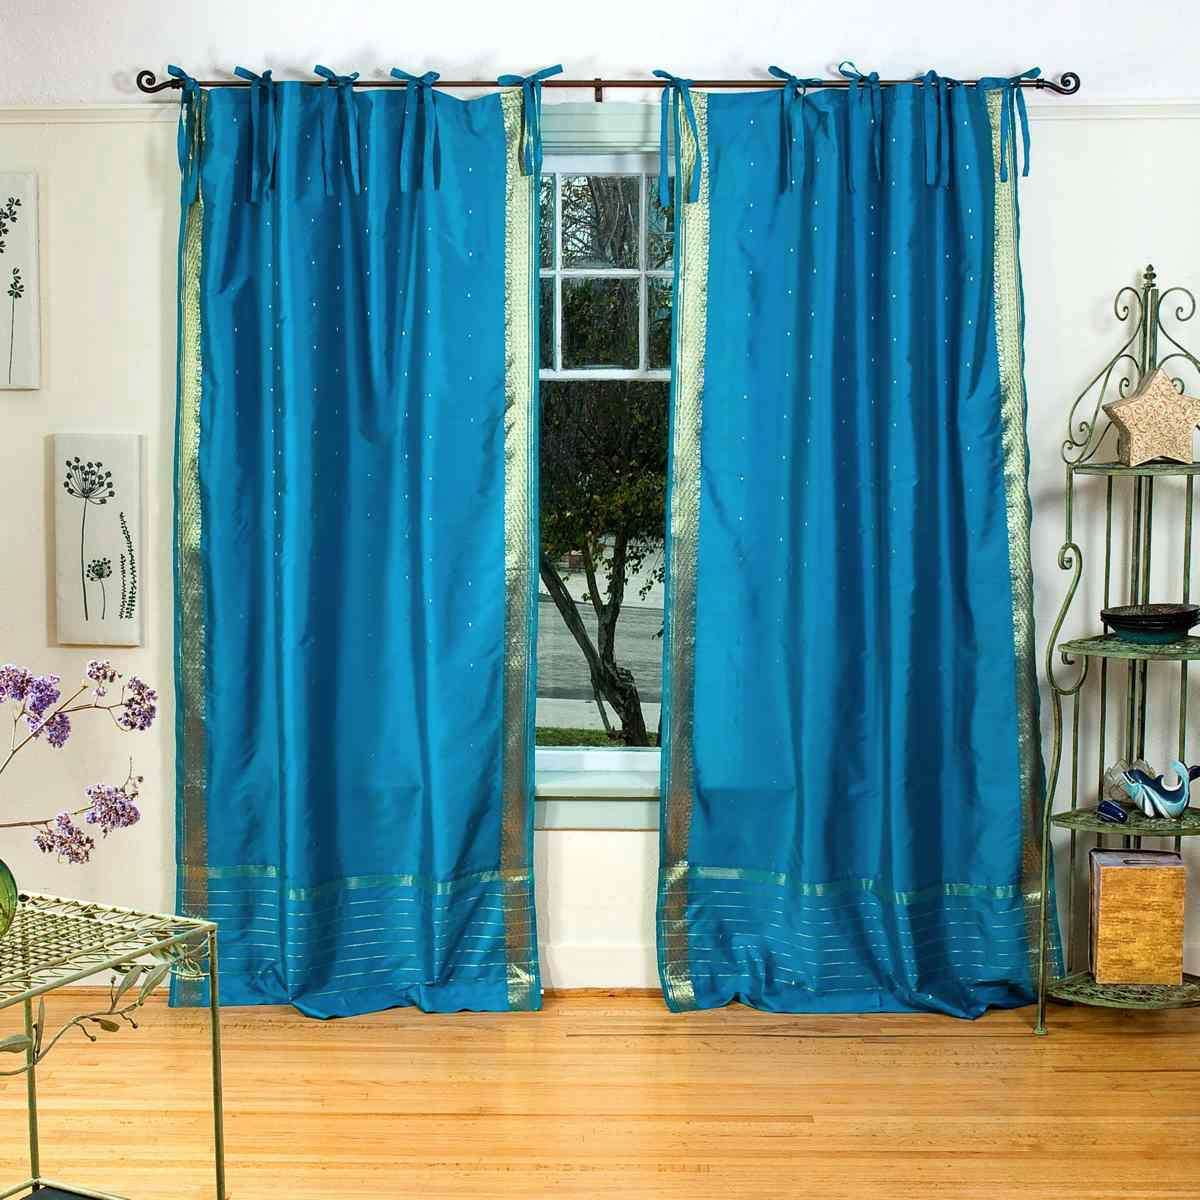 handmade India Sienna RED & NAVY Sari curtain semi sheer panel print 96" 